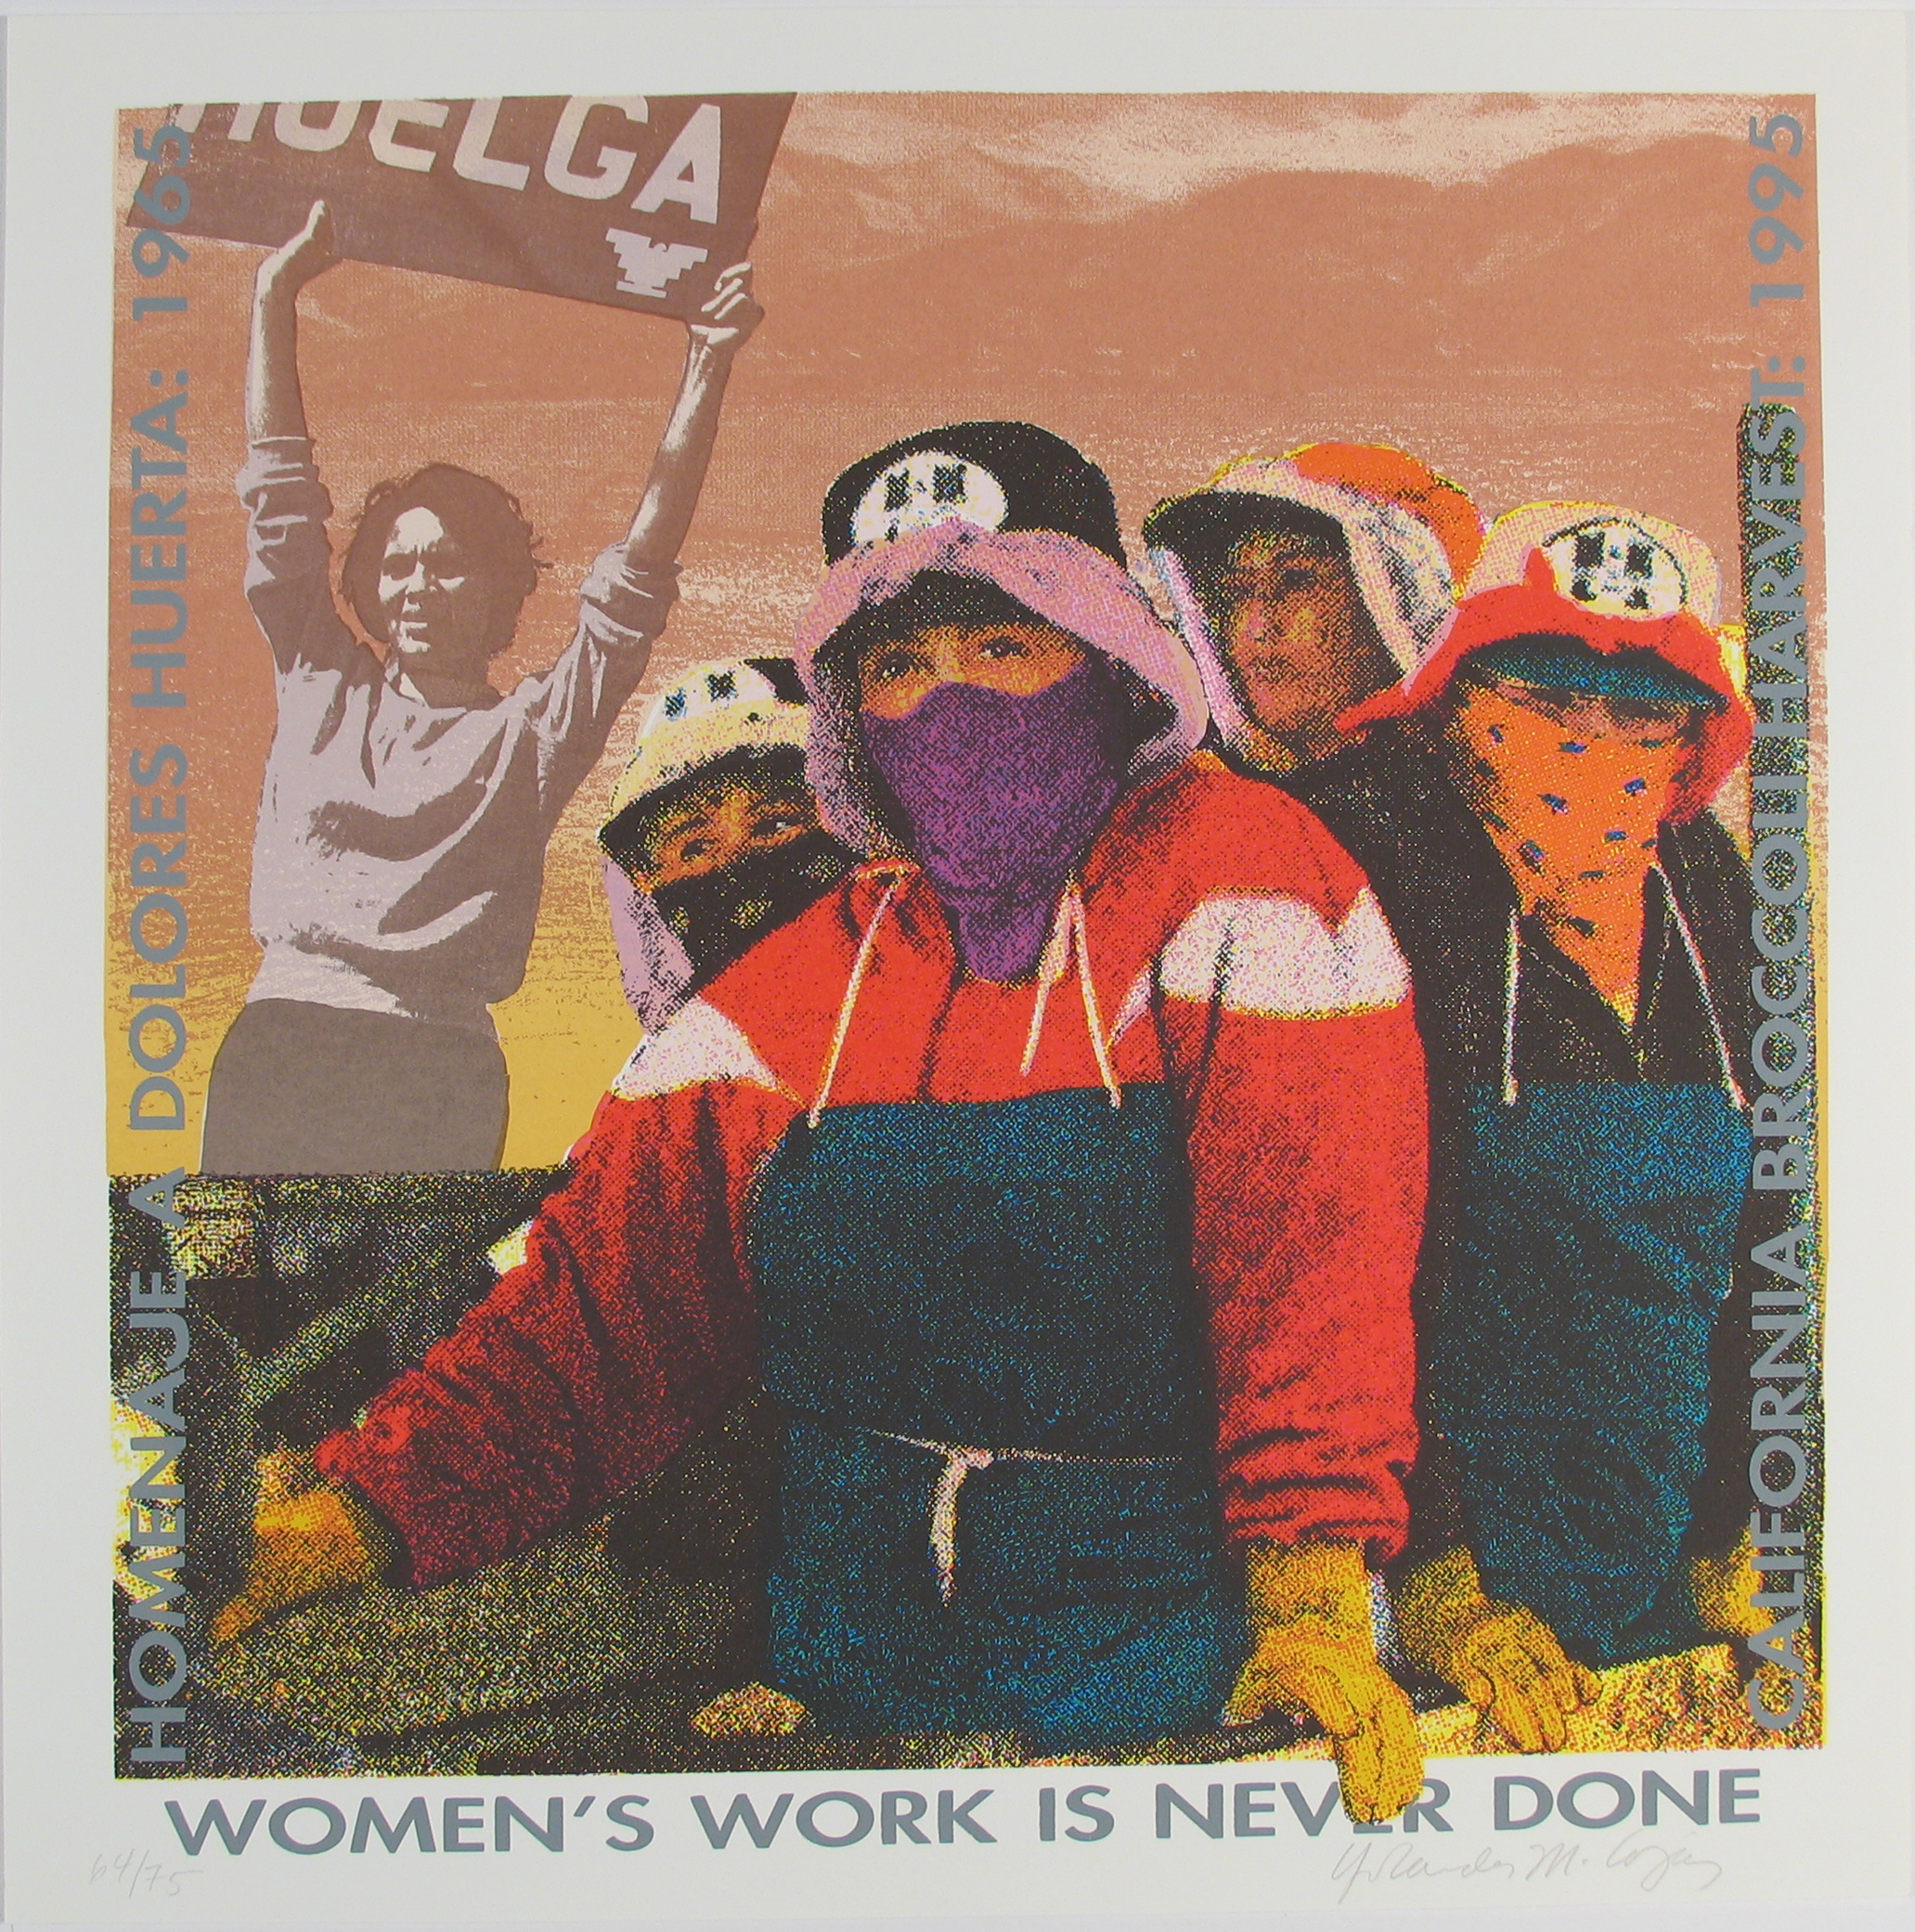 Image credit: Yolanda M. Lopez, “Women's Work is Never Done” (from 10x10: Ten Women/ Ten Prints portfolio), 1995, Screenprint, serigraph, 18 color, on Lenox 100 paper, 20 1/8 x 19 1/2 in. (51.12 x 49.53 cm). Gift of the Arizona Print Forum, ASU.